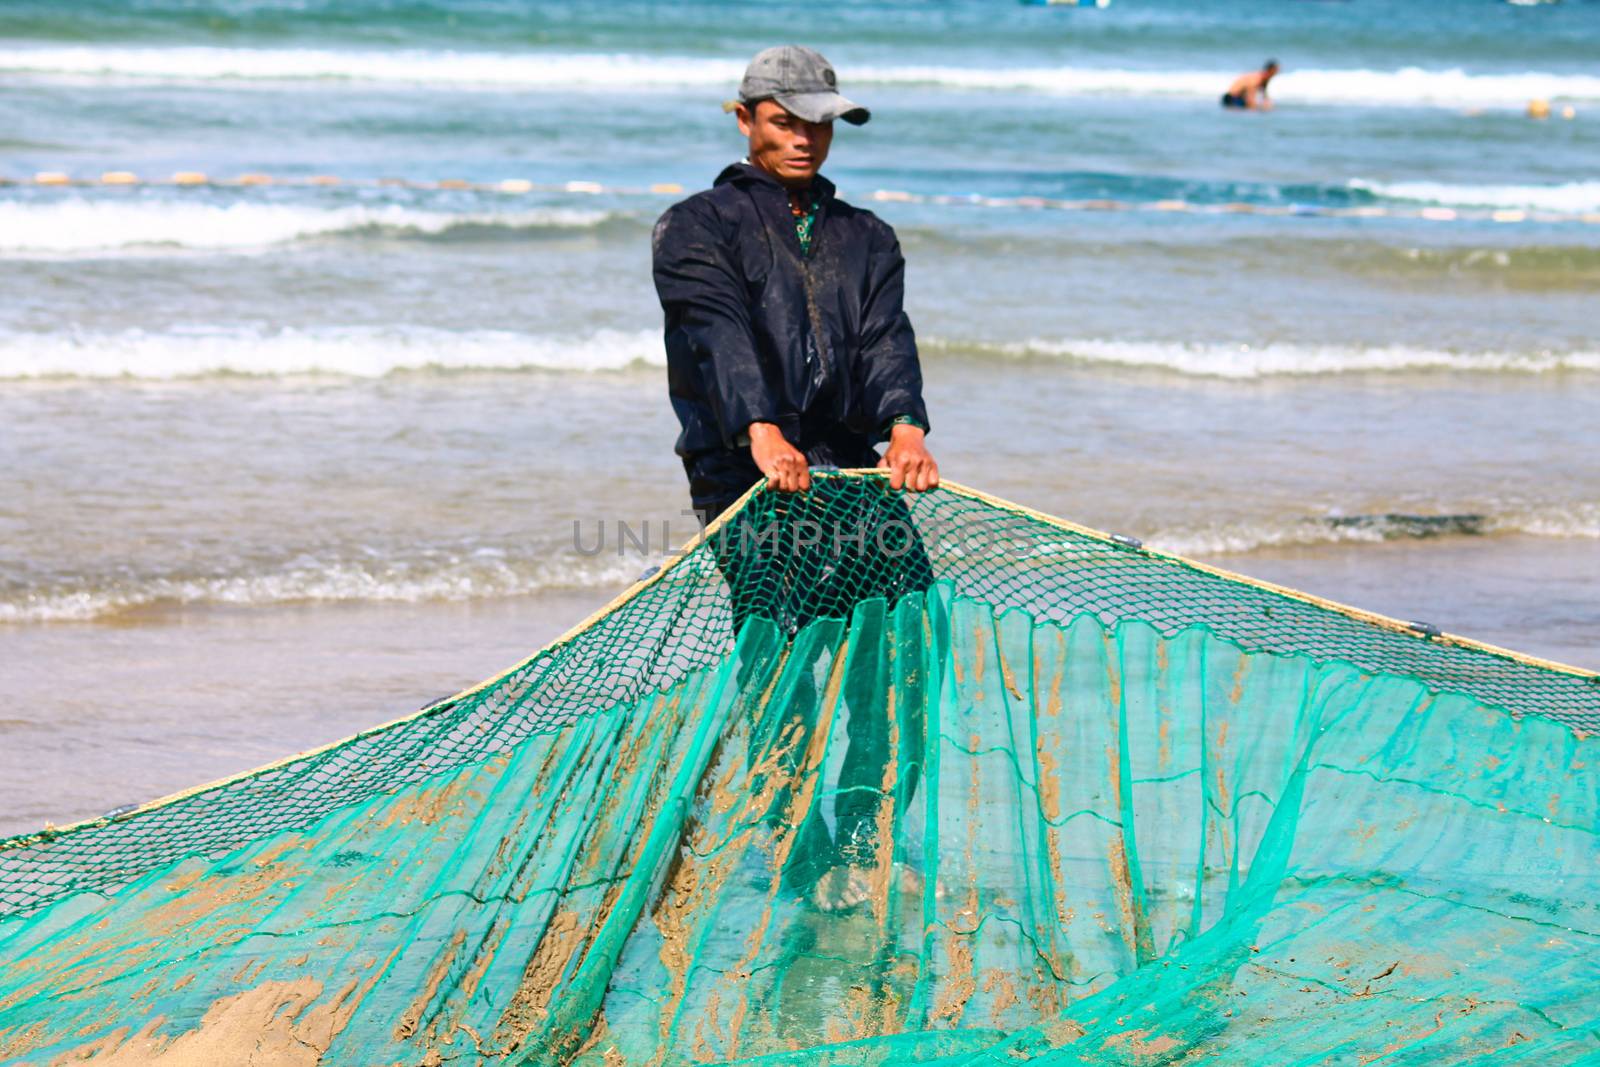 Editorial. Vietnamese Fisherman pulling a fishing net by Sonnet15